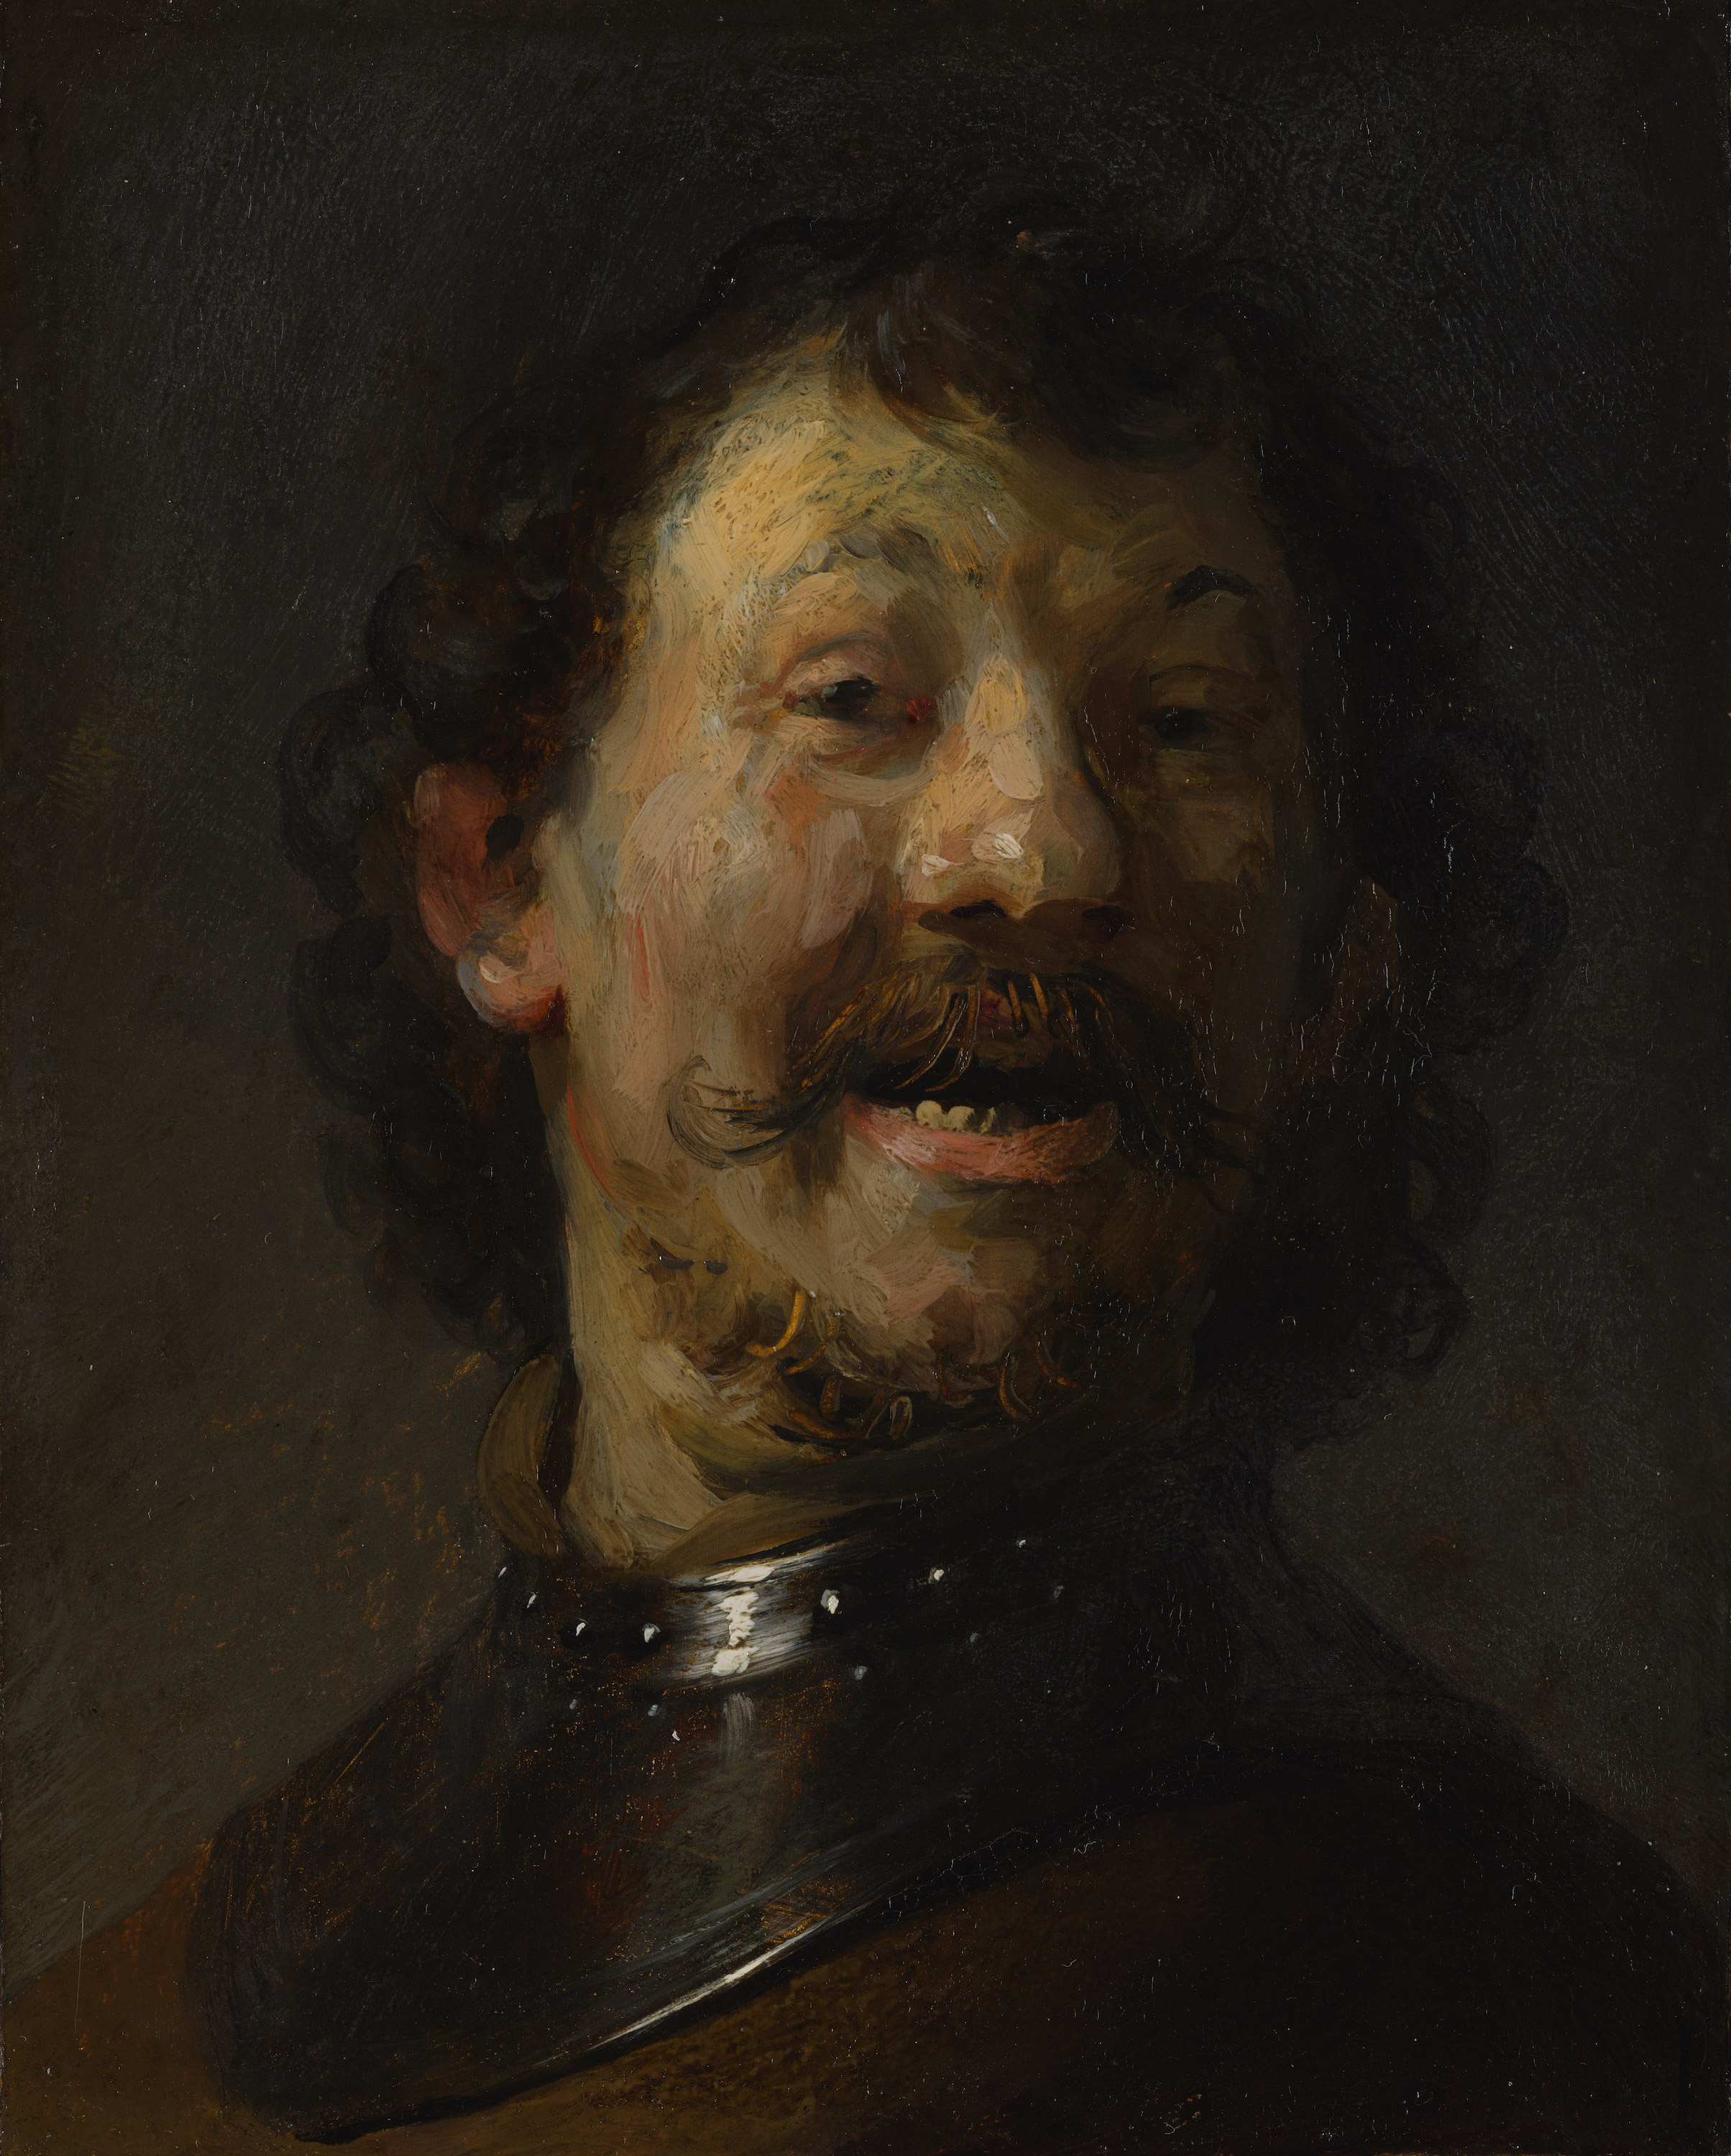 द लाफिंग मैन by Rembrandt van Rijn - 1629 - 1630 - 15.3 x 12.2 सेमी   